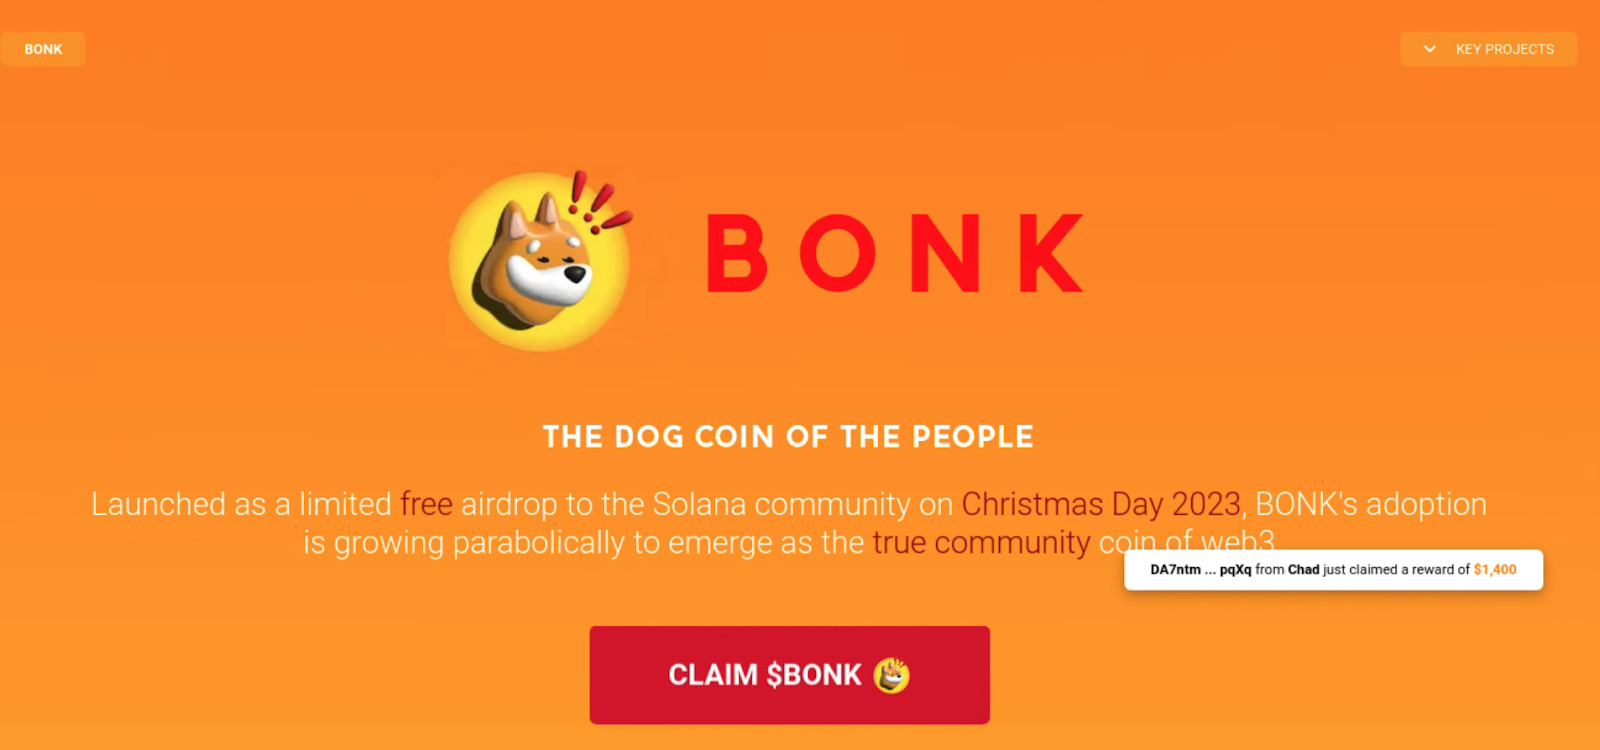 Sample BONK-themed phishing page